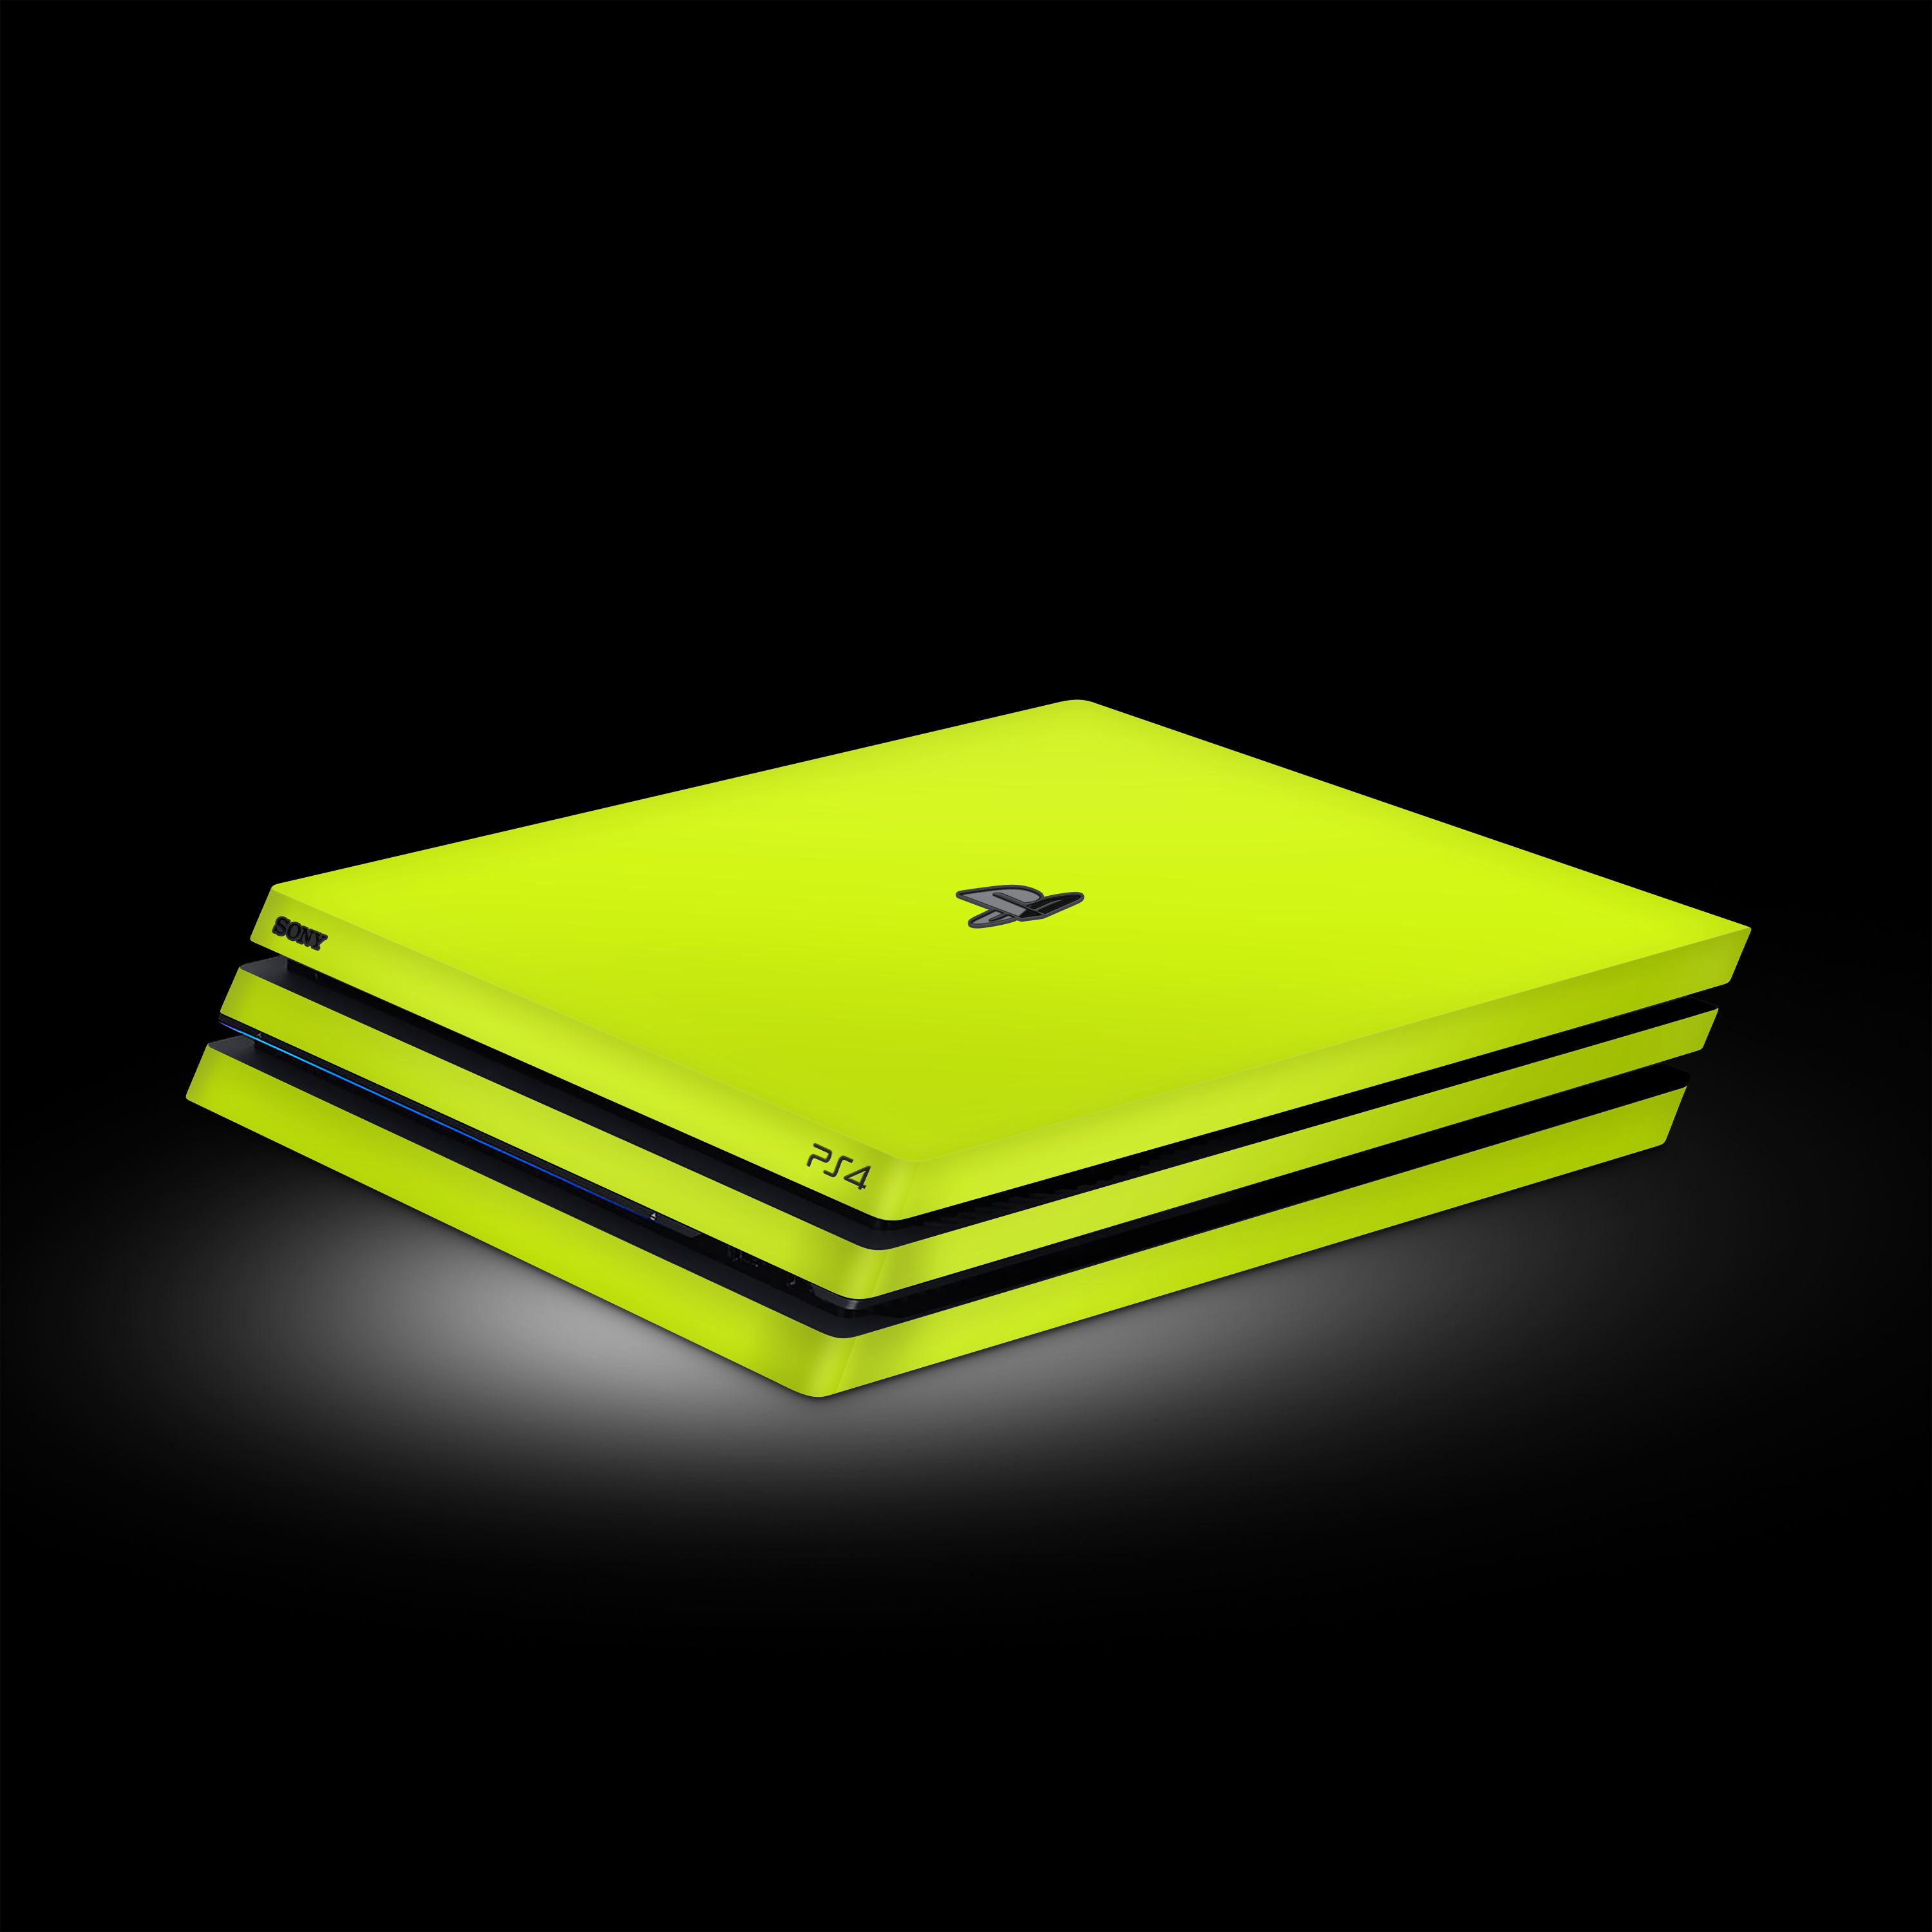 Neon Yellow (PlayStation 4 Pro Skin)